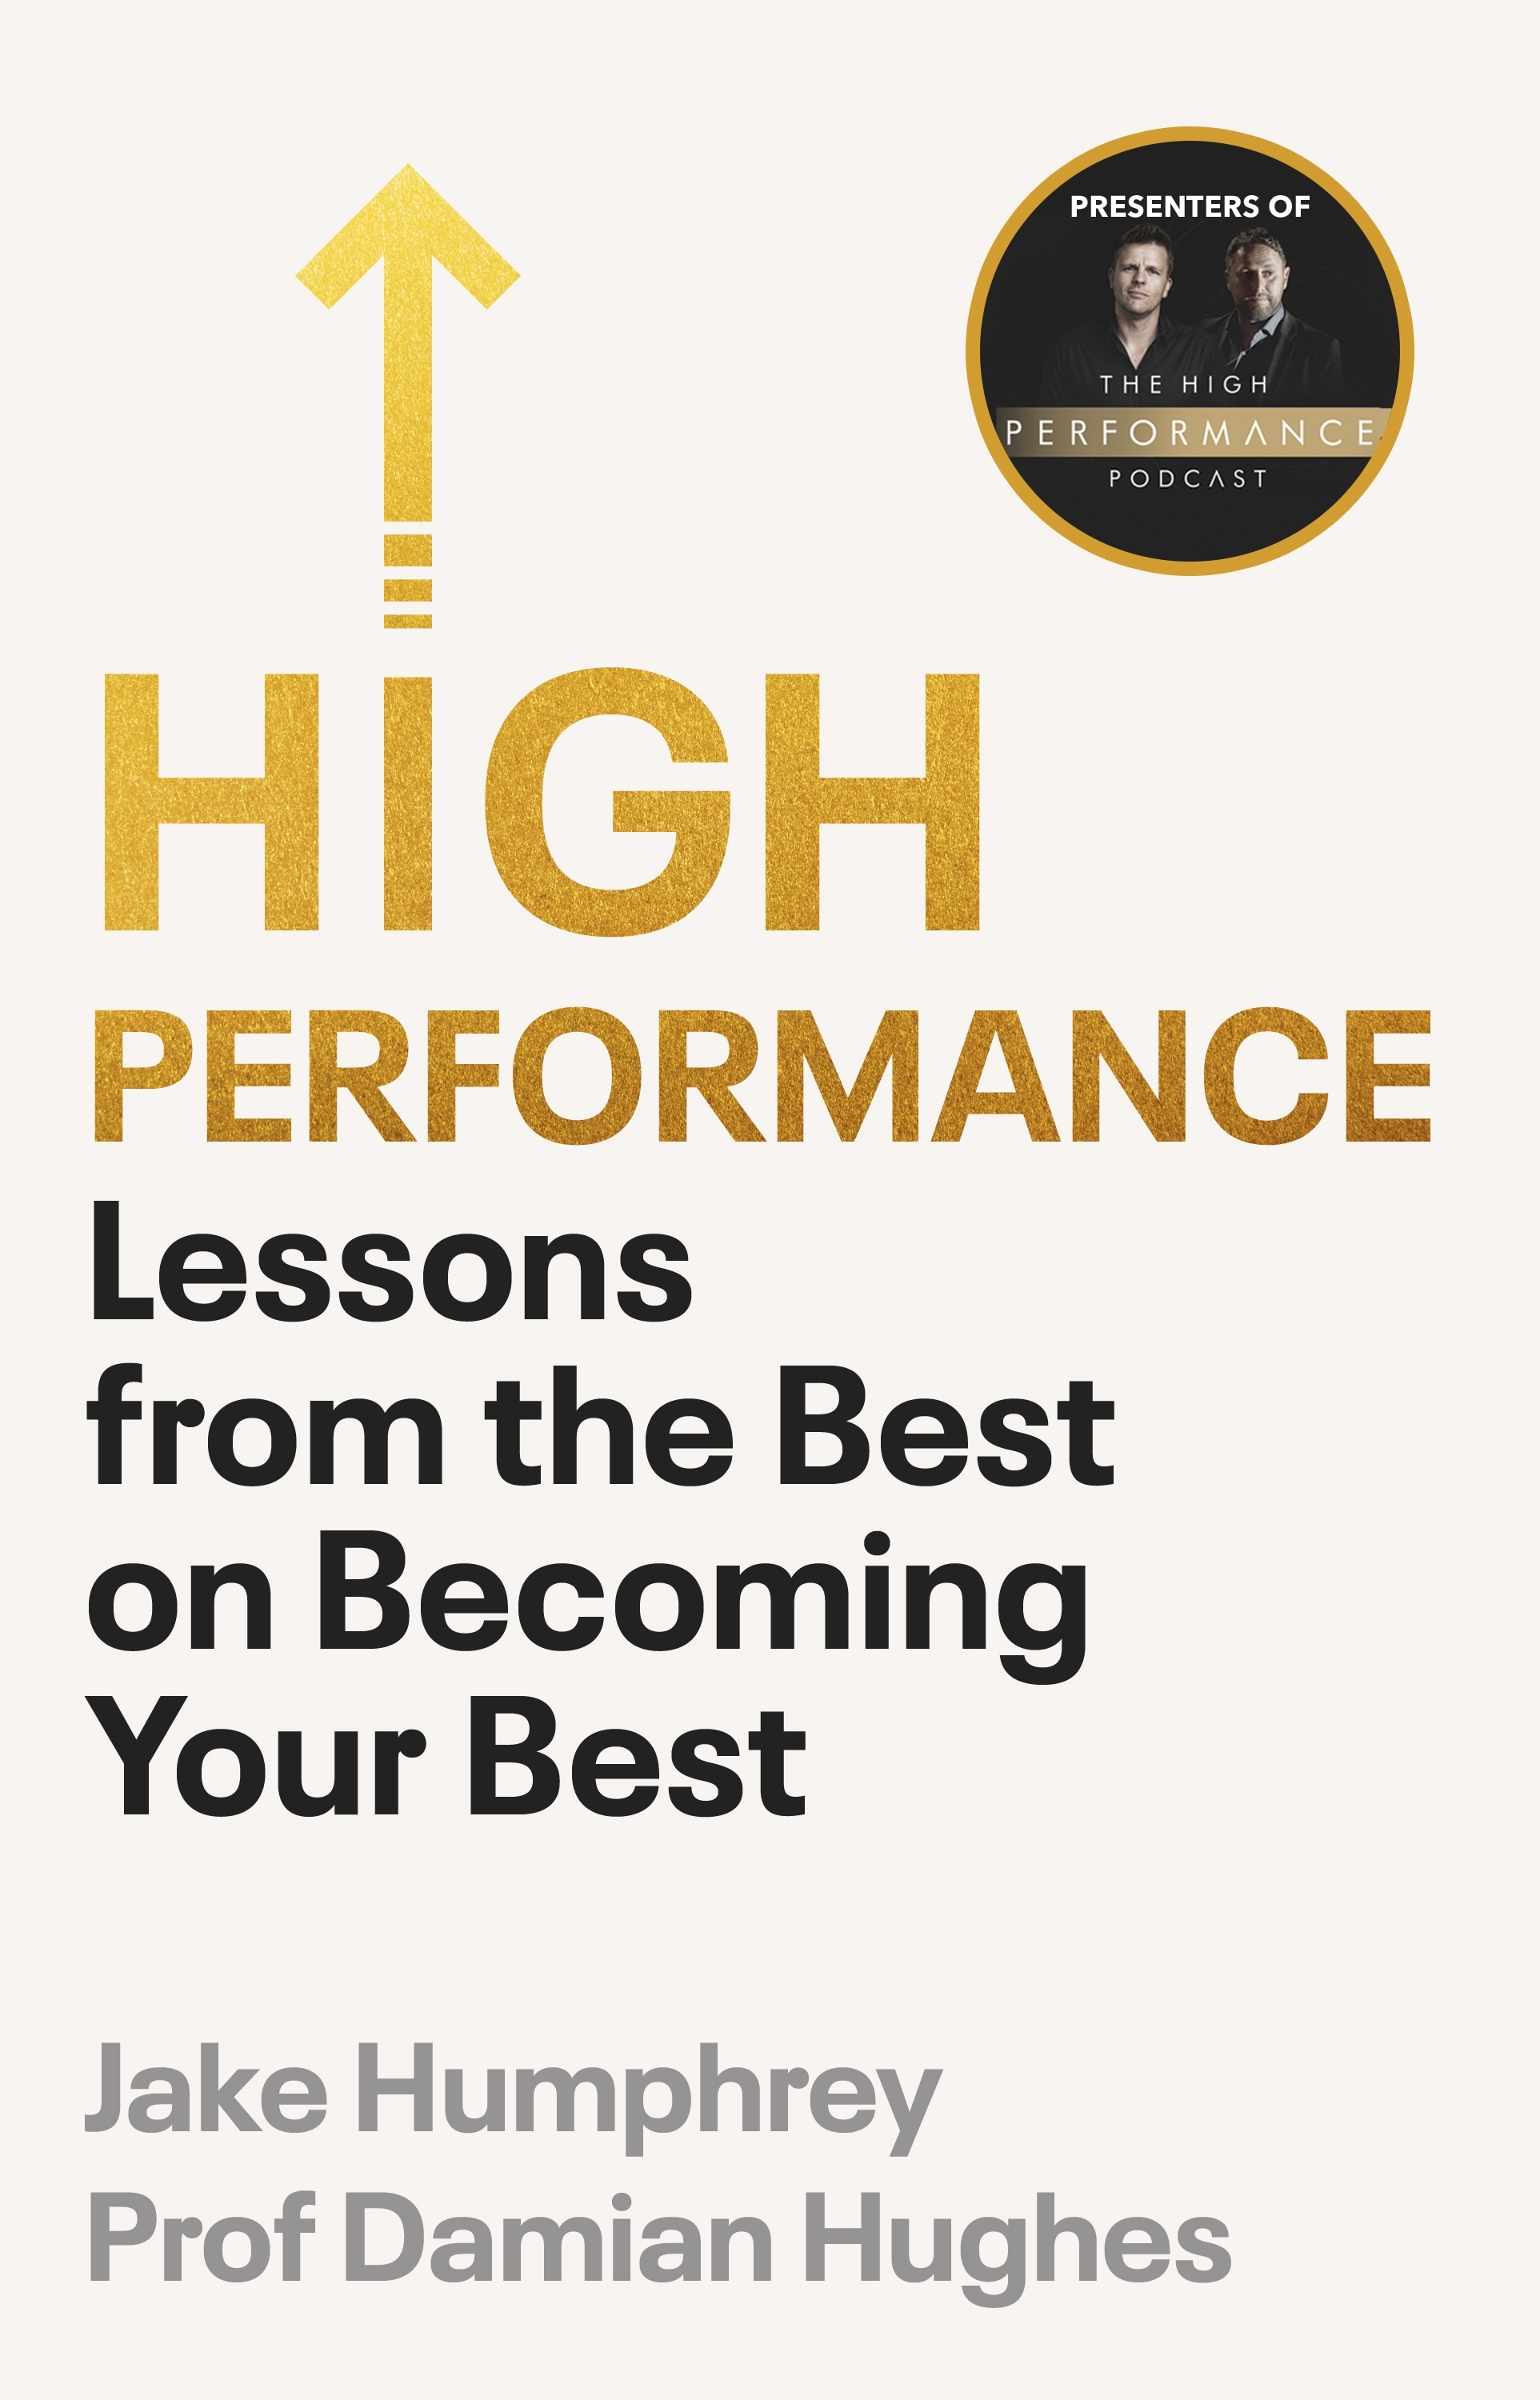 Book “High Performance” by Jake Humphrey, Damian Hughes — December 9, 2021